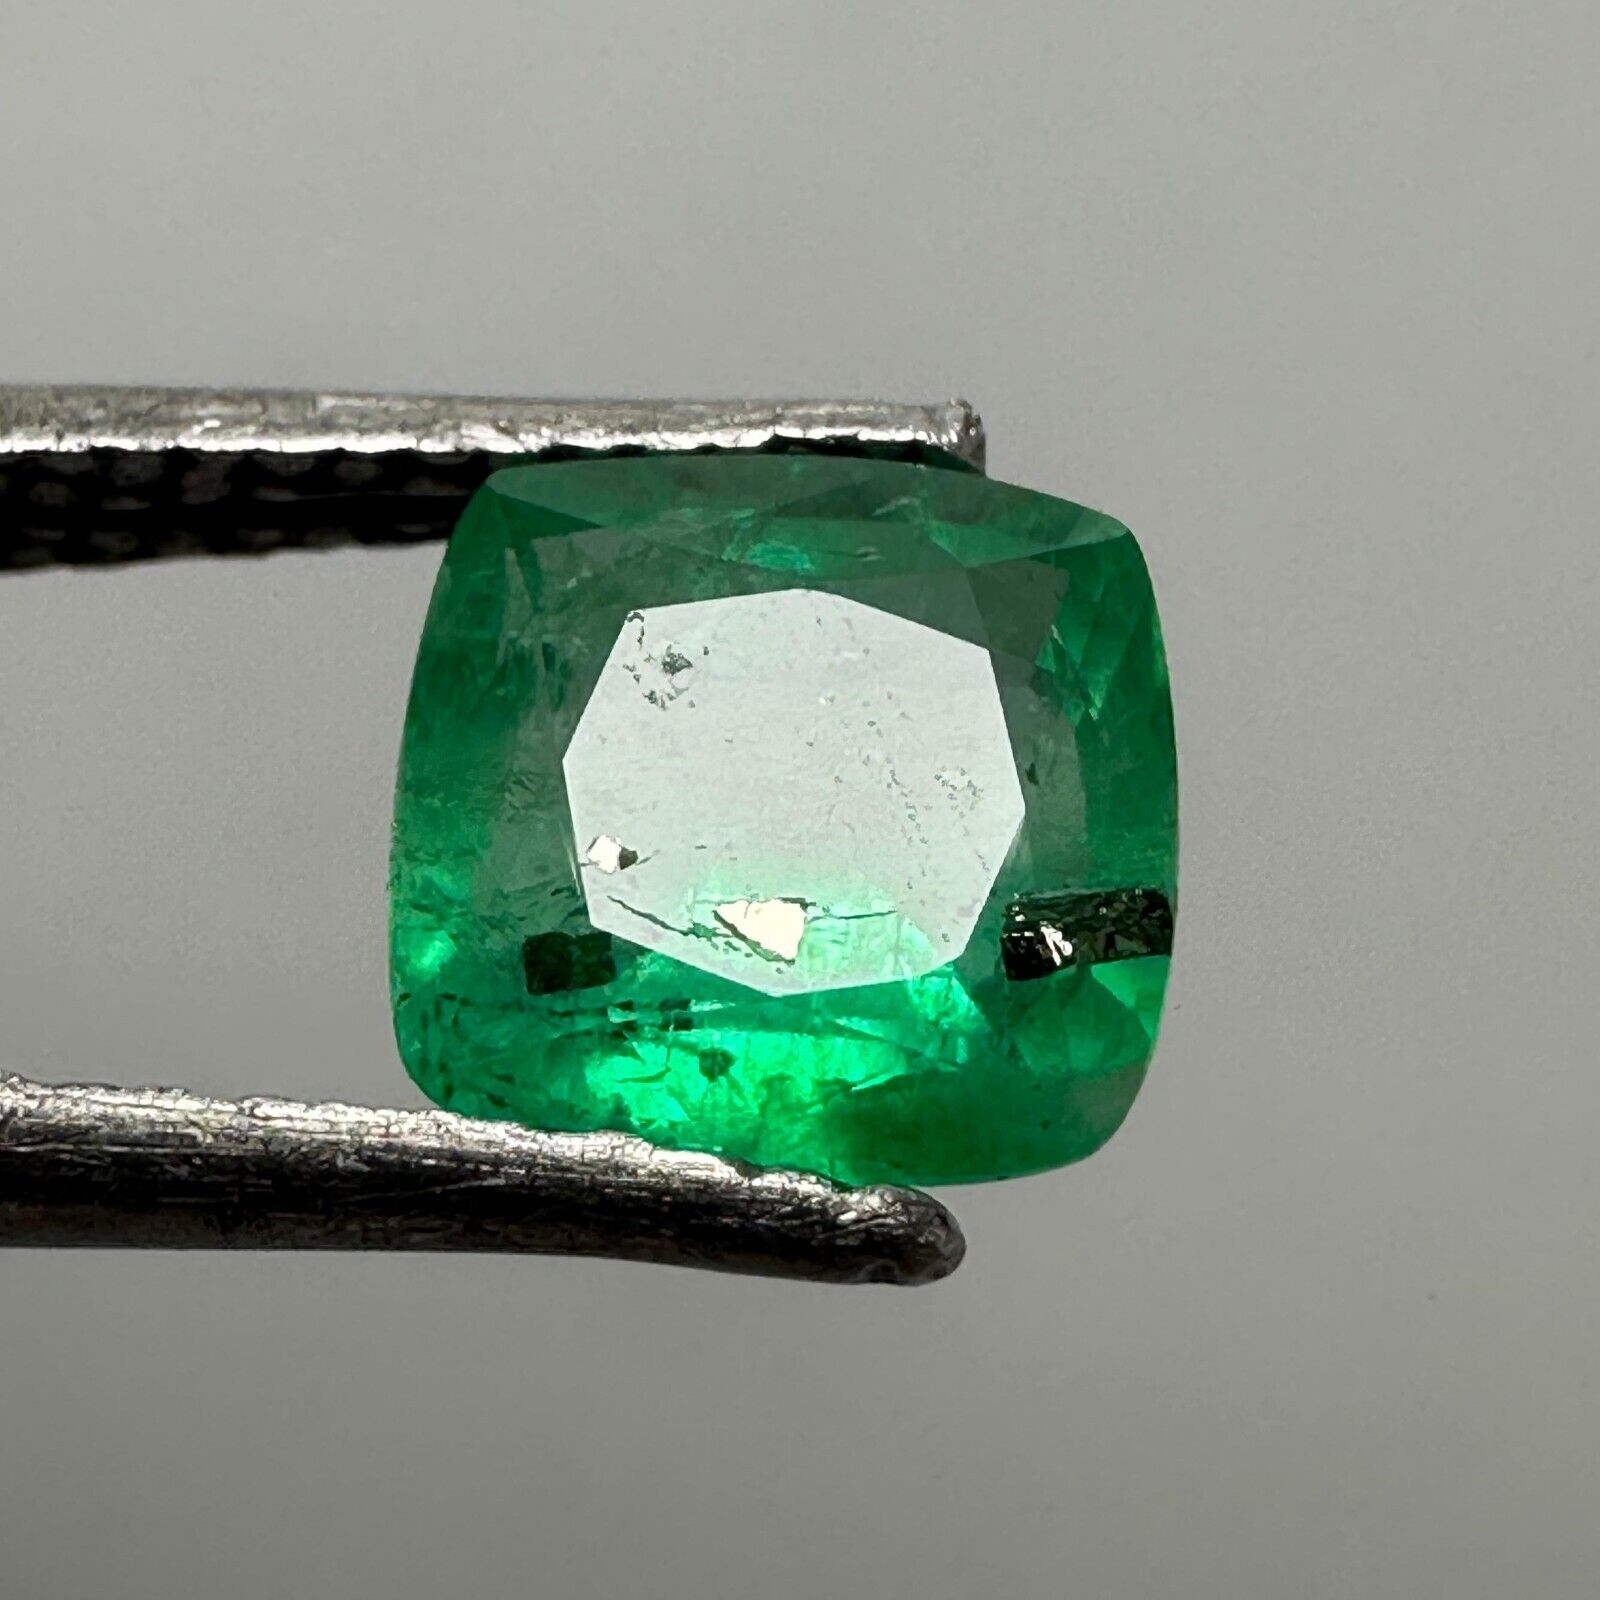 1.7 Carat. Beautiful Cut Emerald